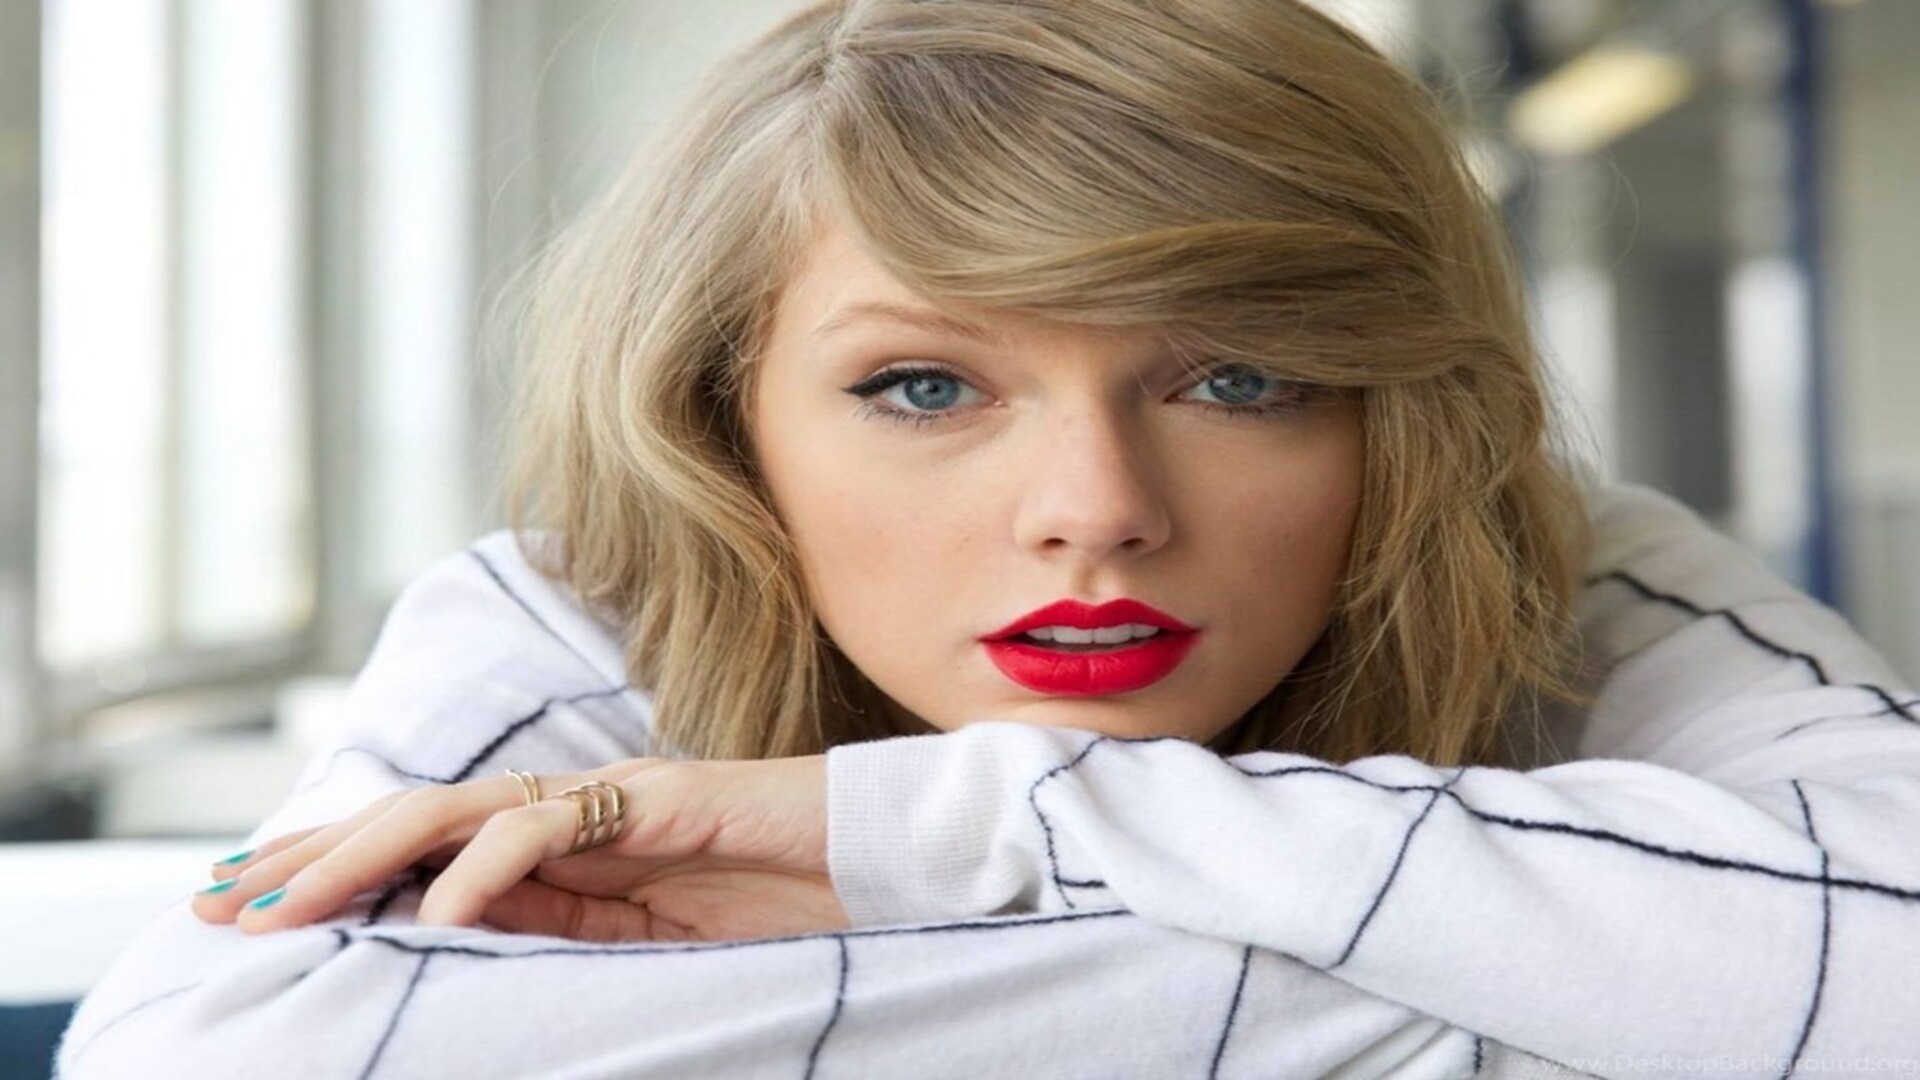 American Singer - Taylor Swift